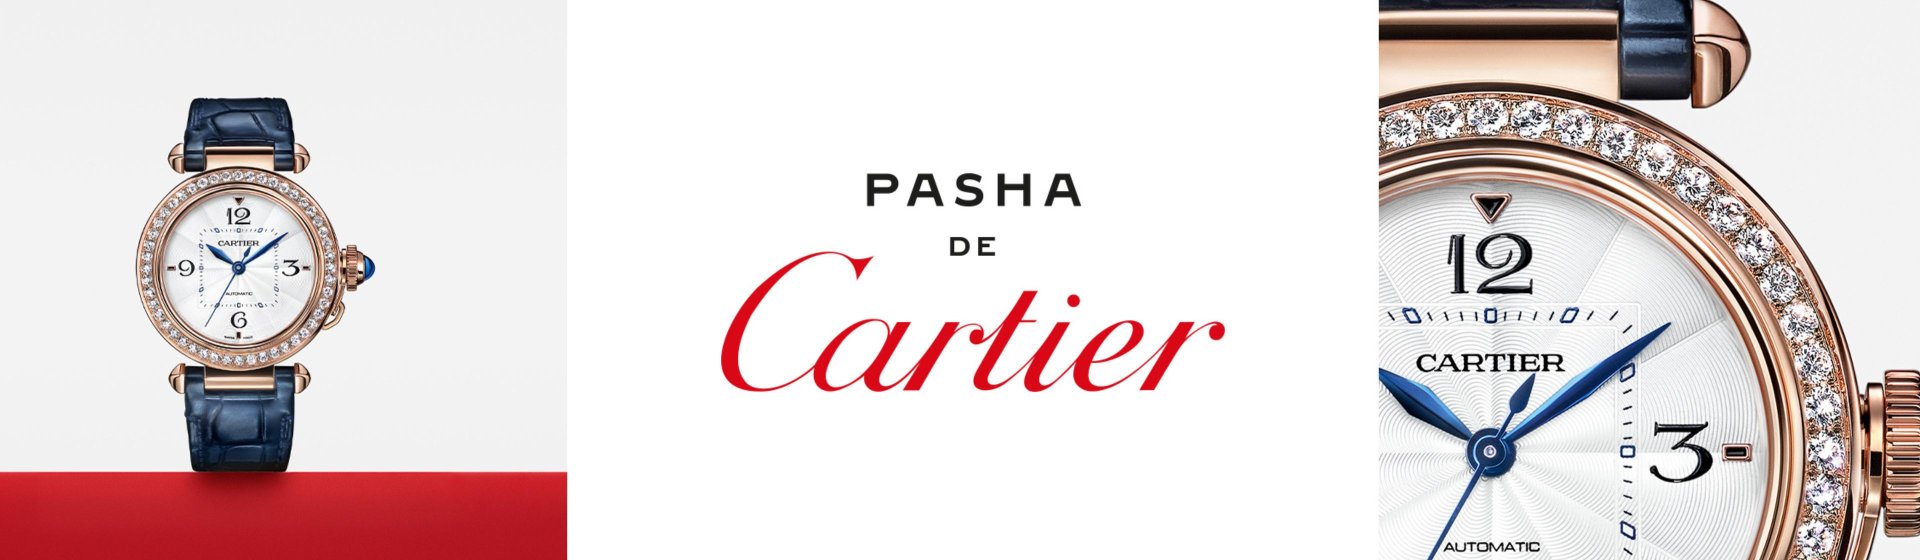 Cartier PashaDeCartier Duehrkoop Slider 3840x1120px